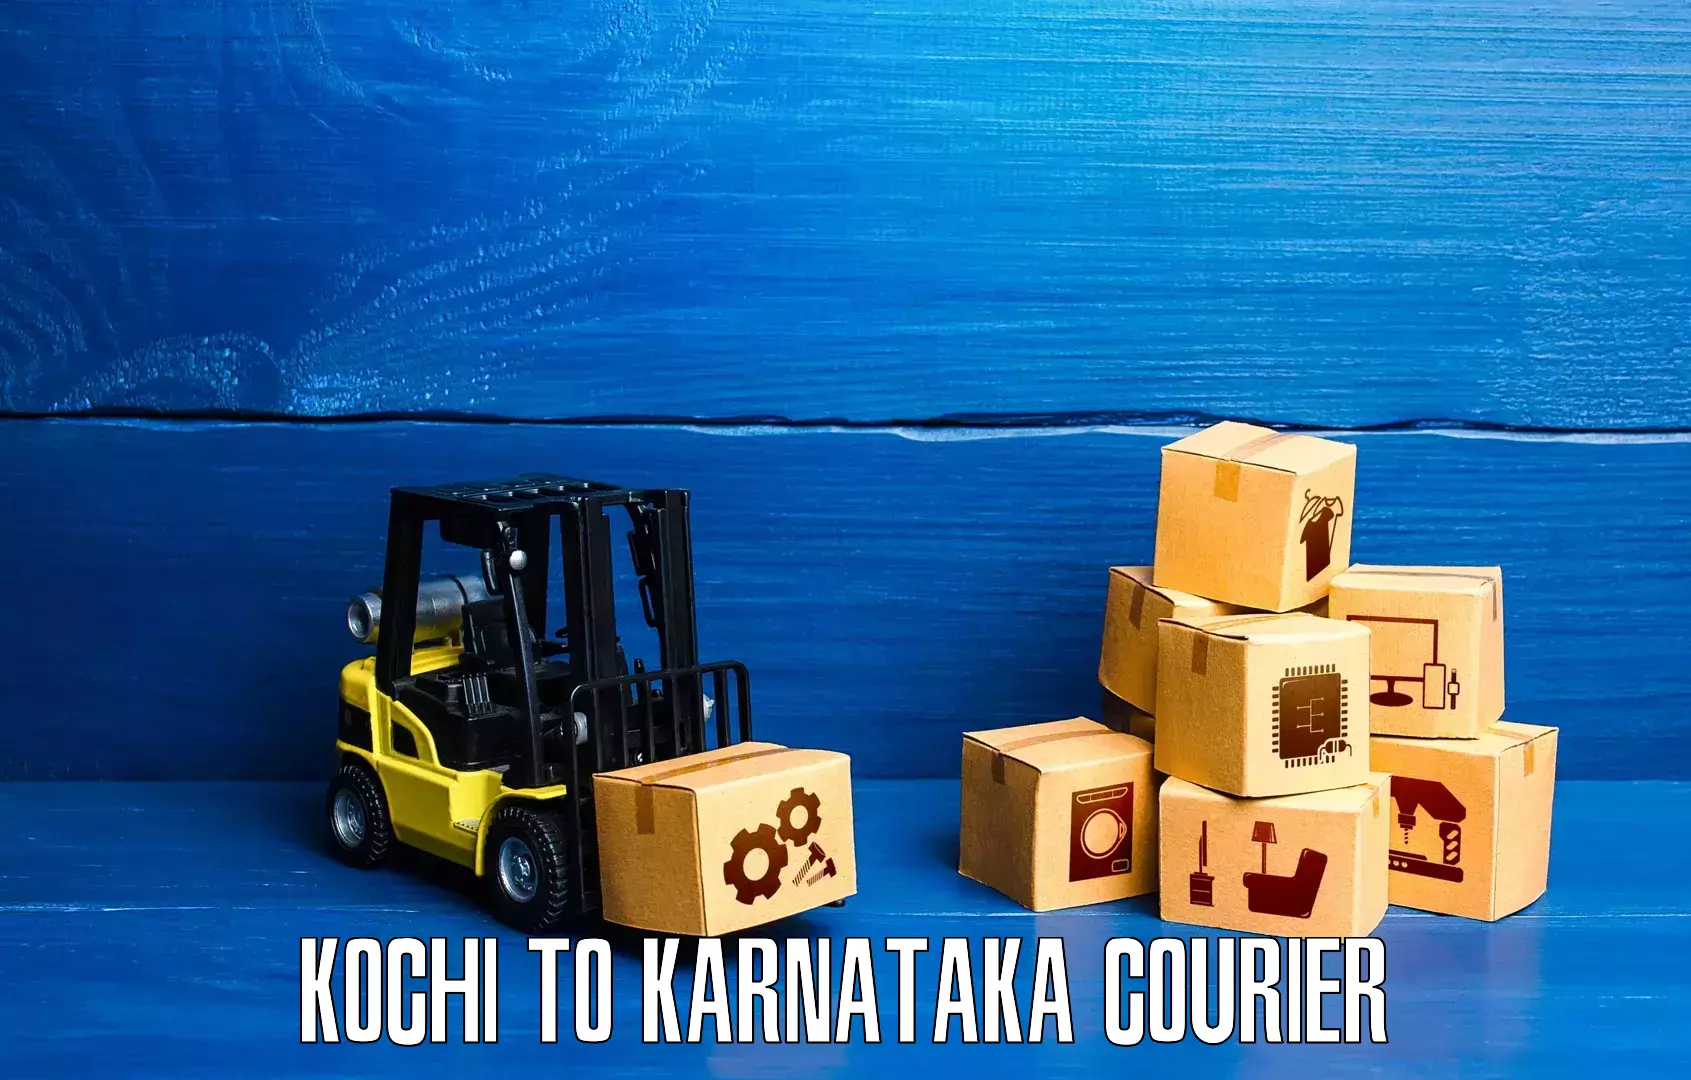 Global logistics network Kochi to Kodagu